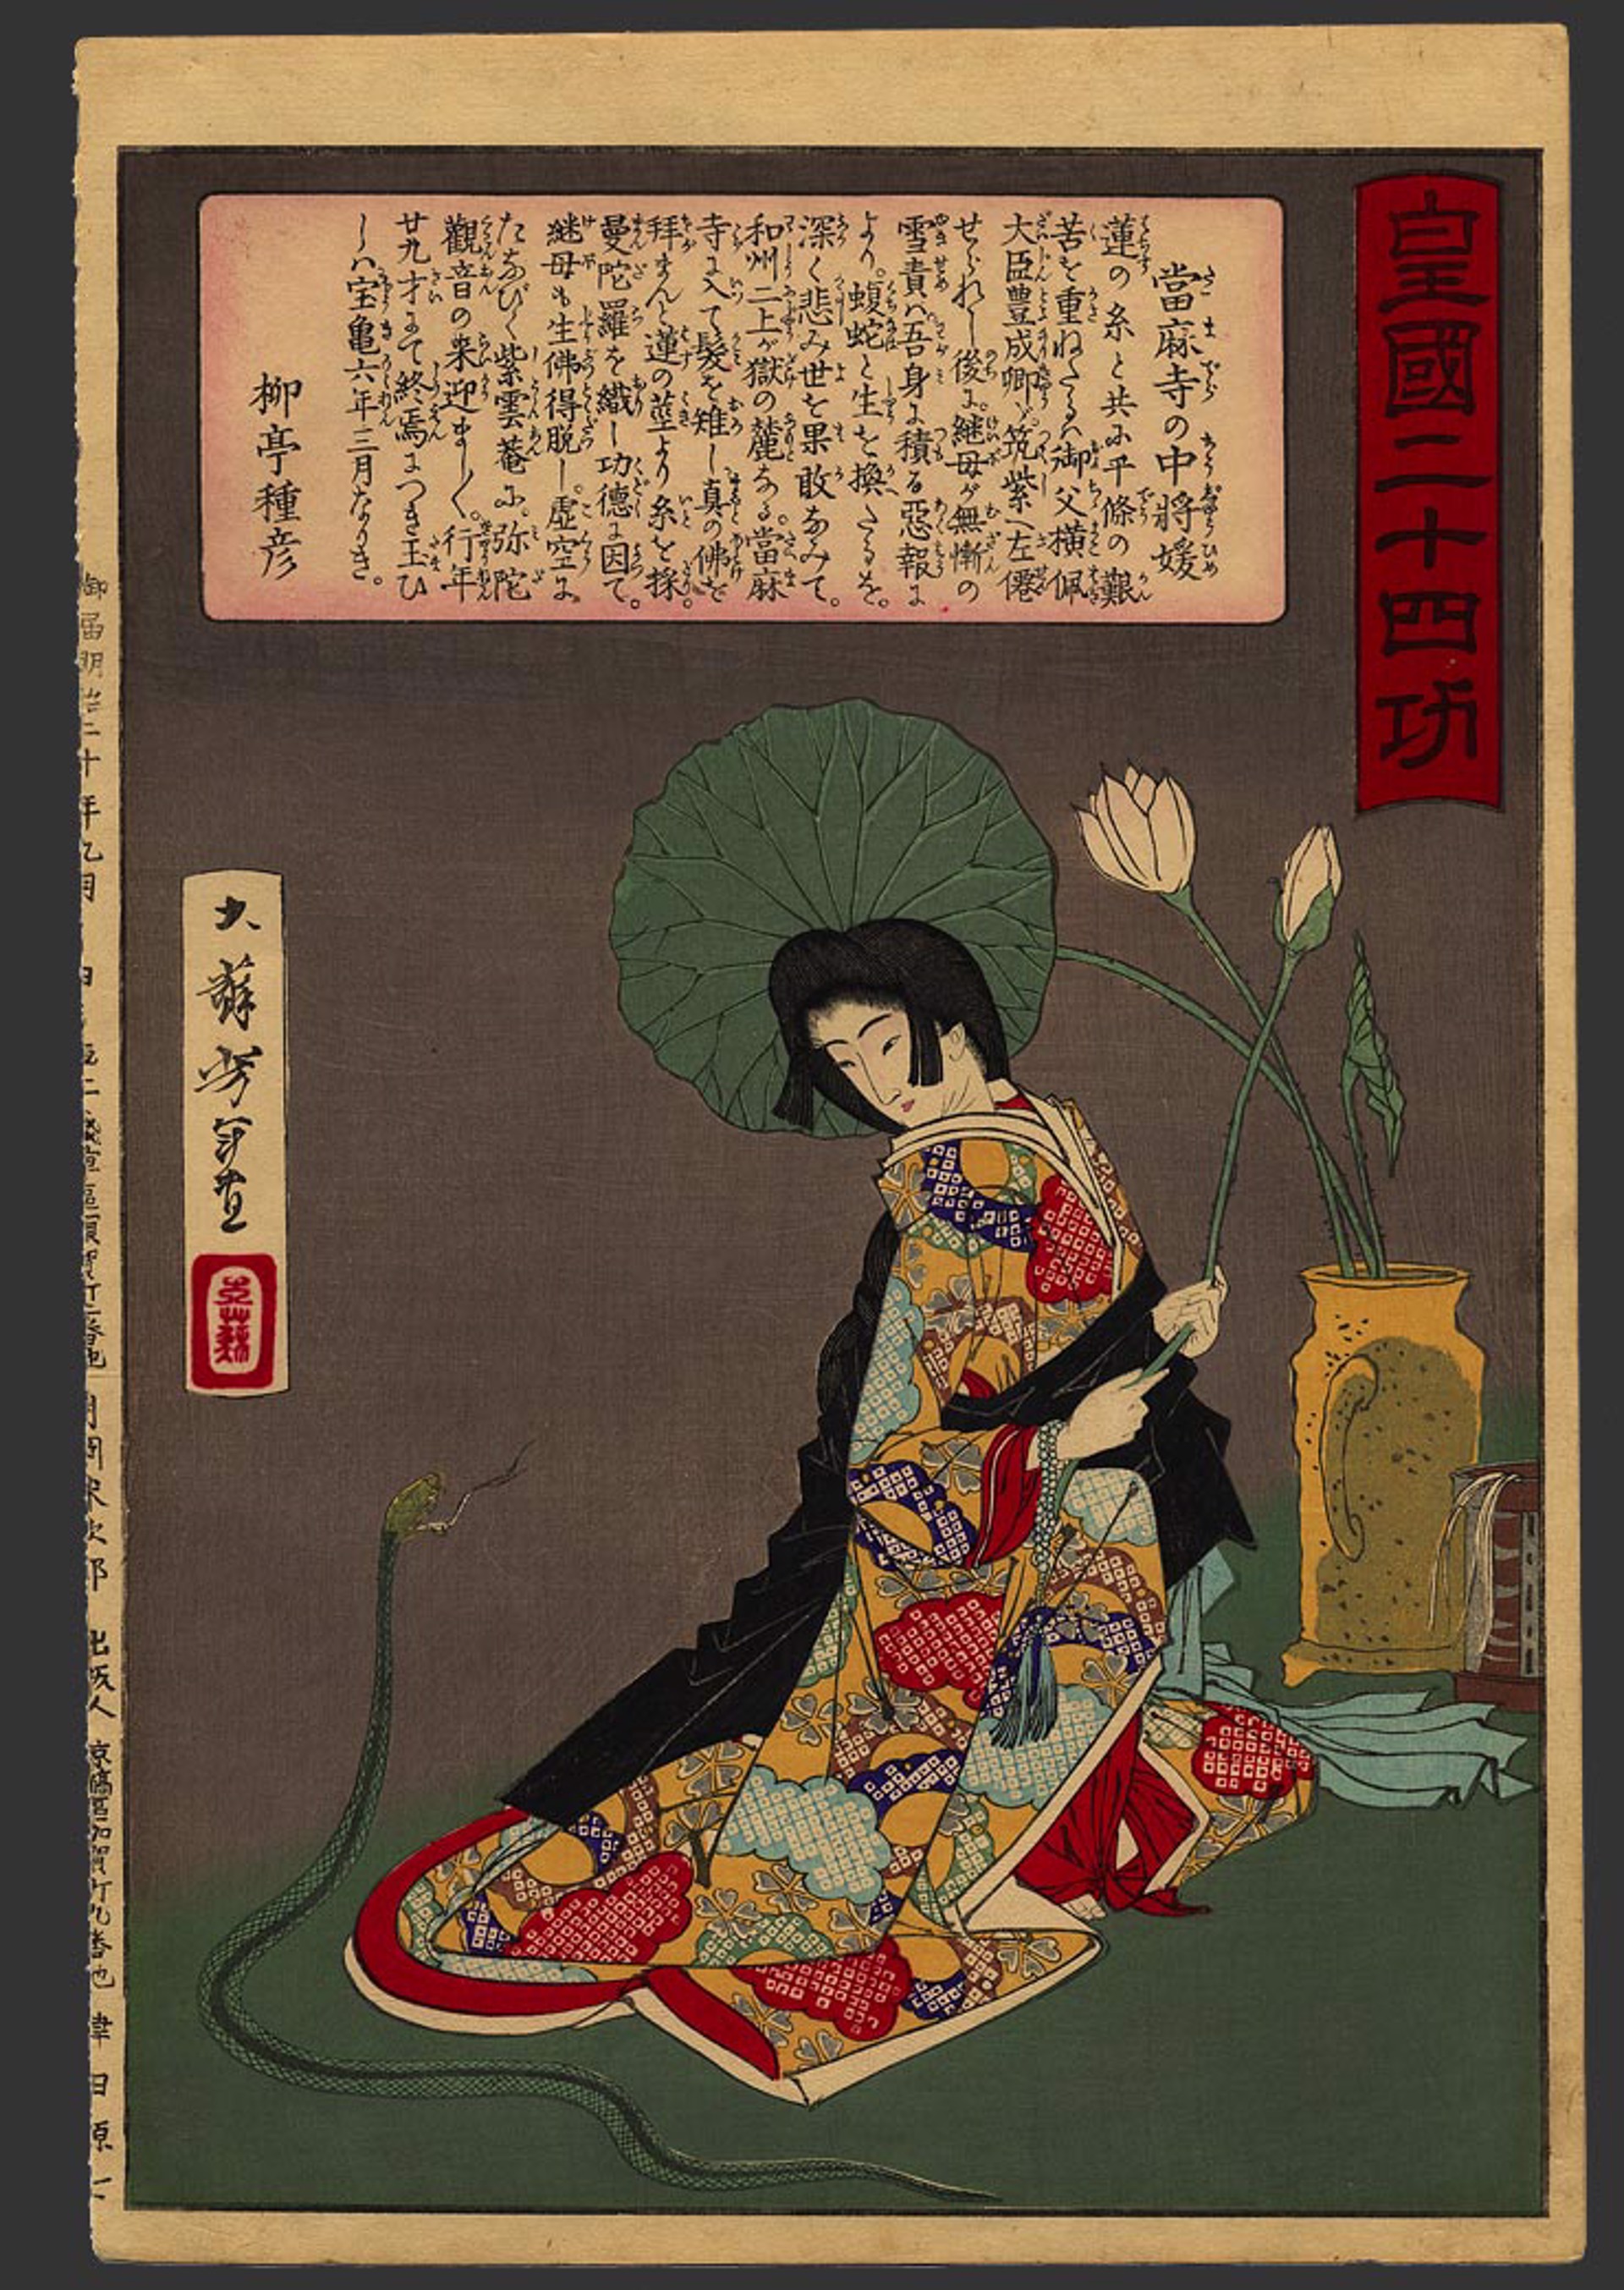 #18 Princess Chujohime (753-81) 24 Accomplishments in Imperial Japan by Yoshitoshi